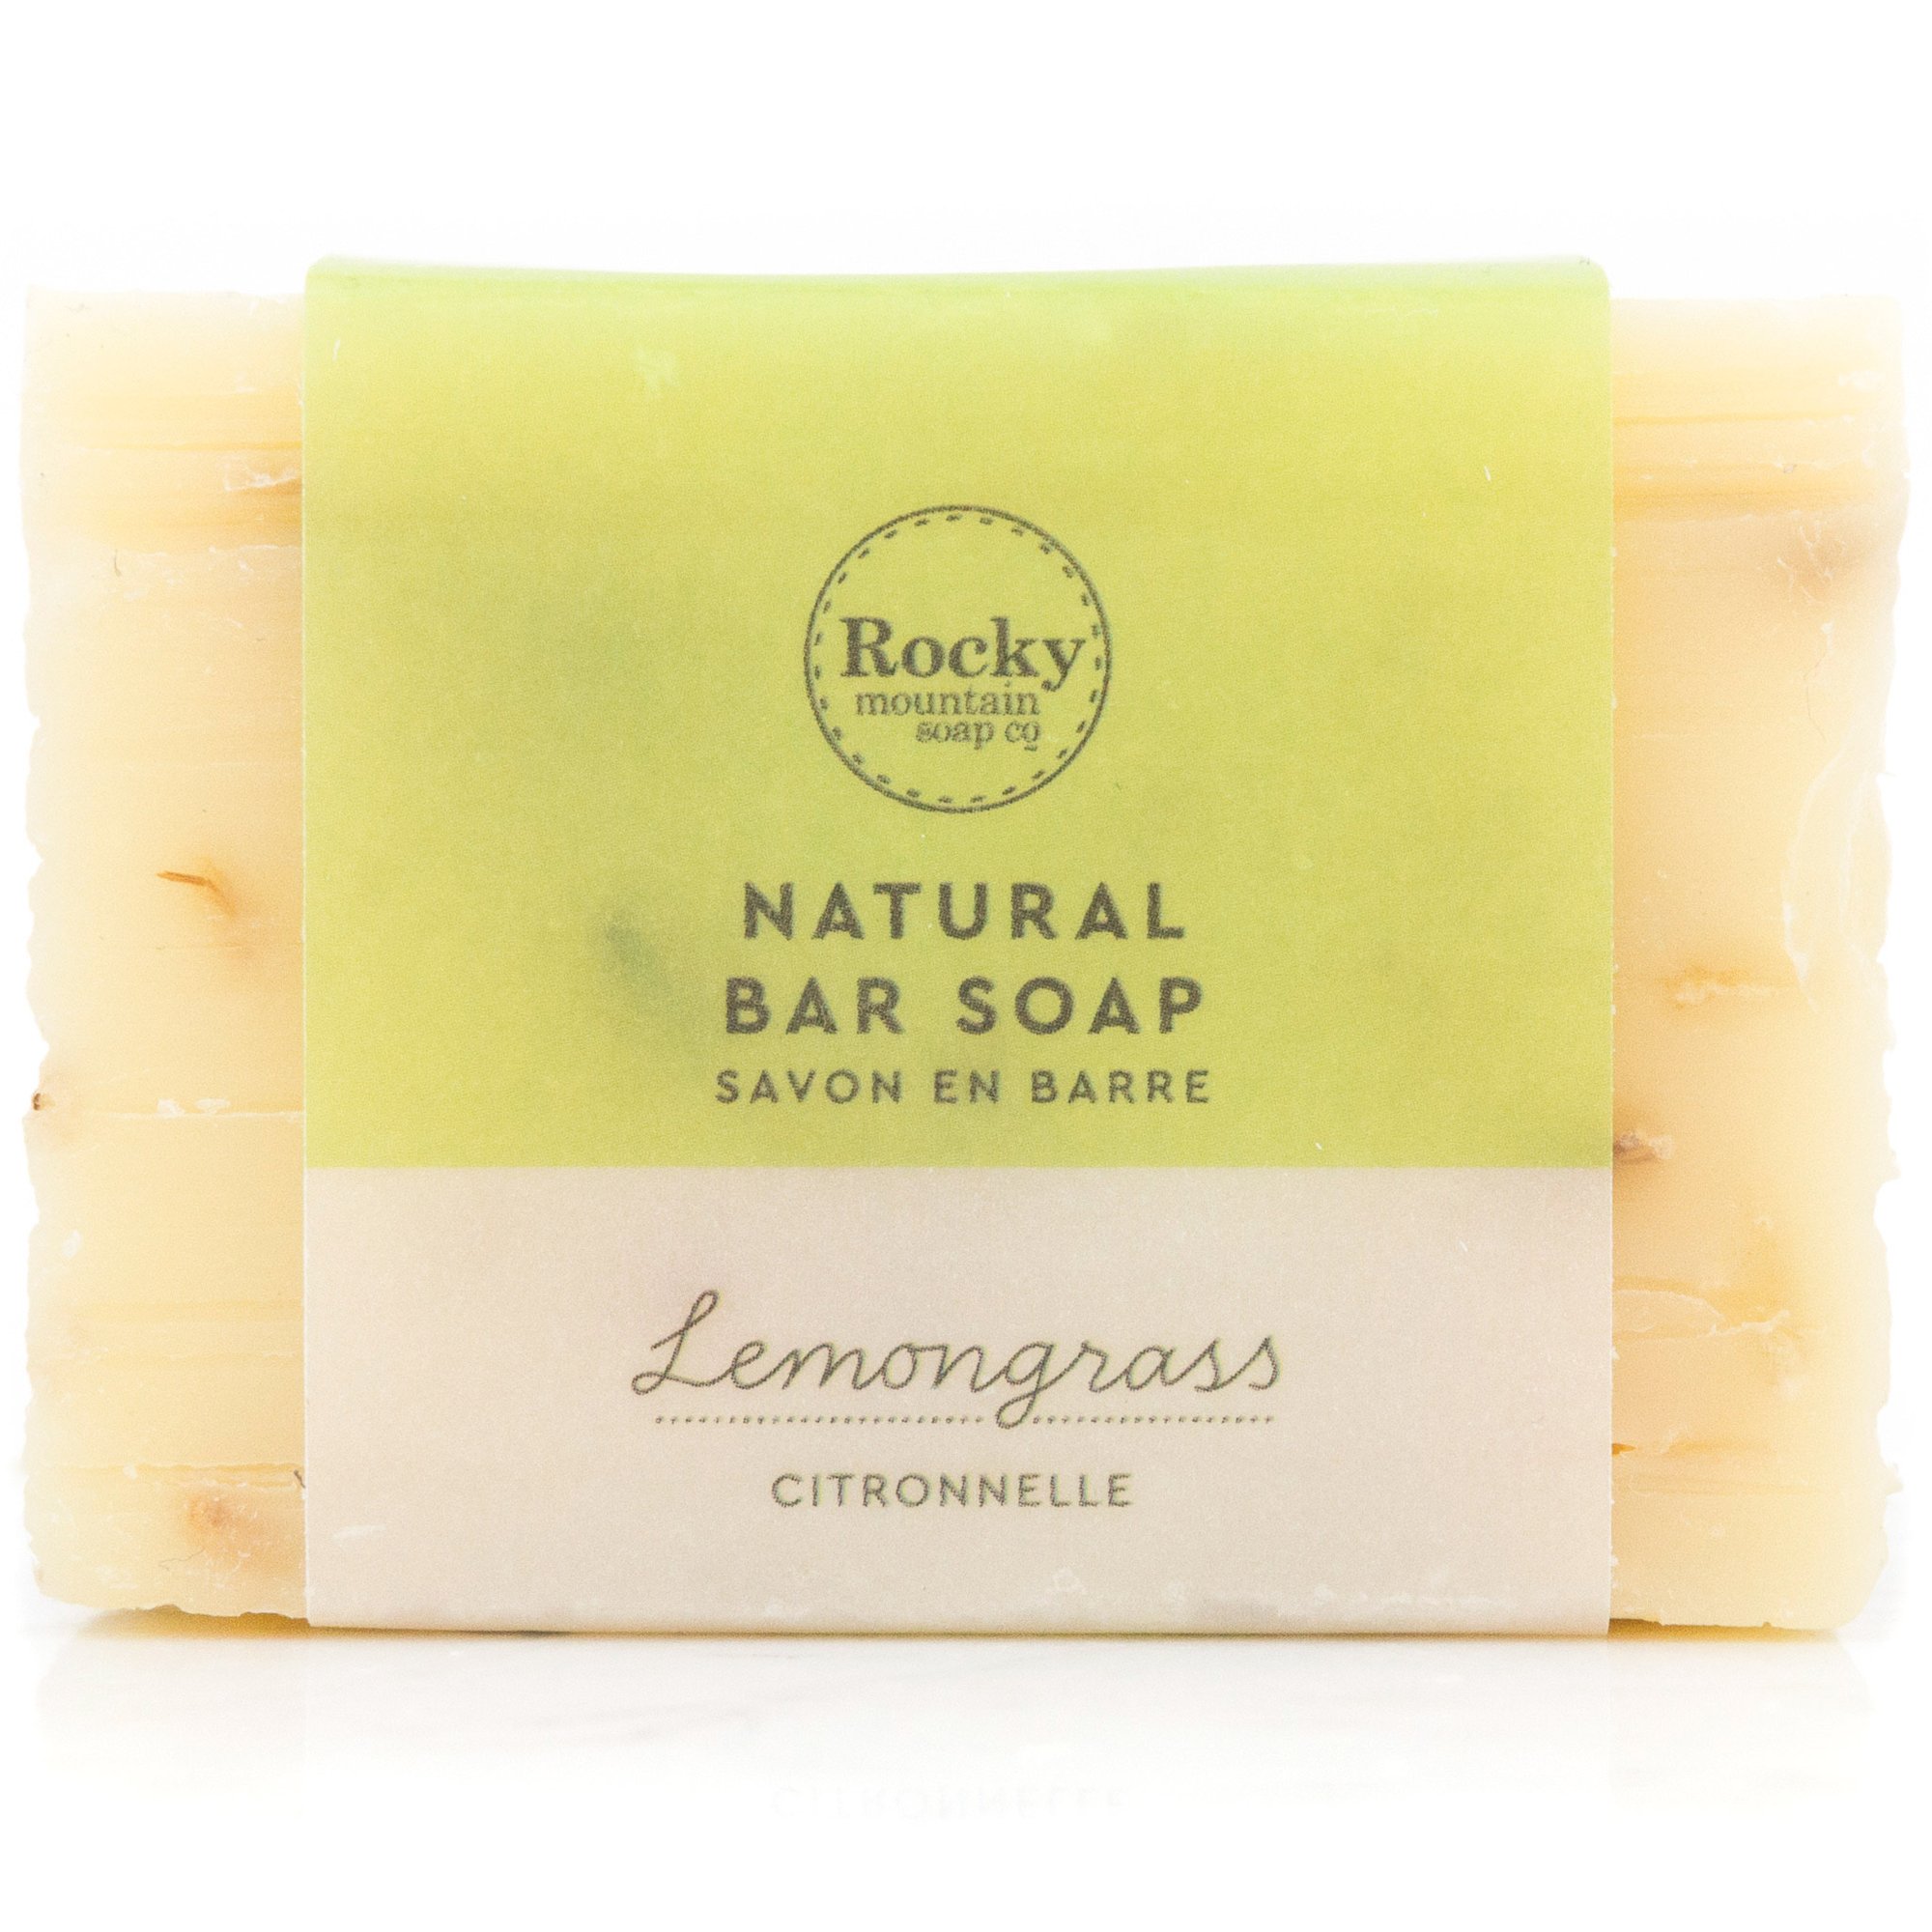 Lemongrass Soap | All Natural Lemongrass Essential Oil Soap